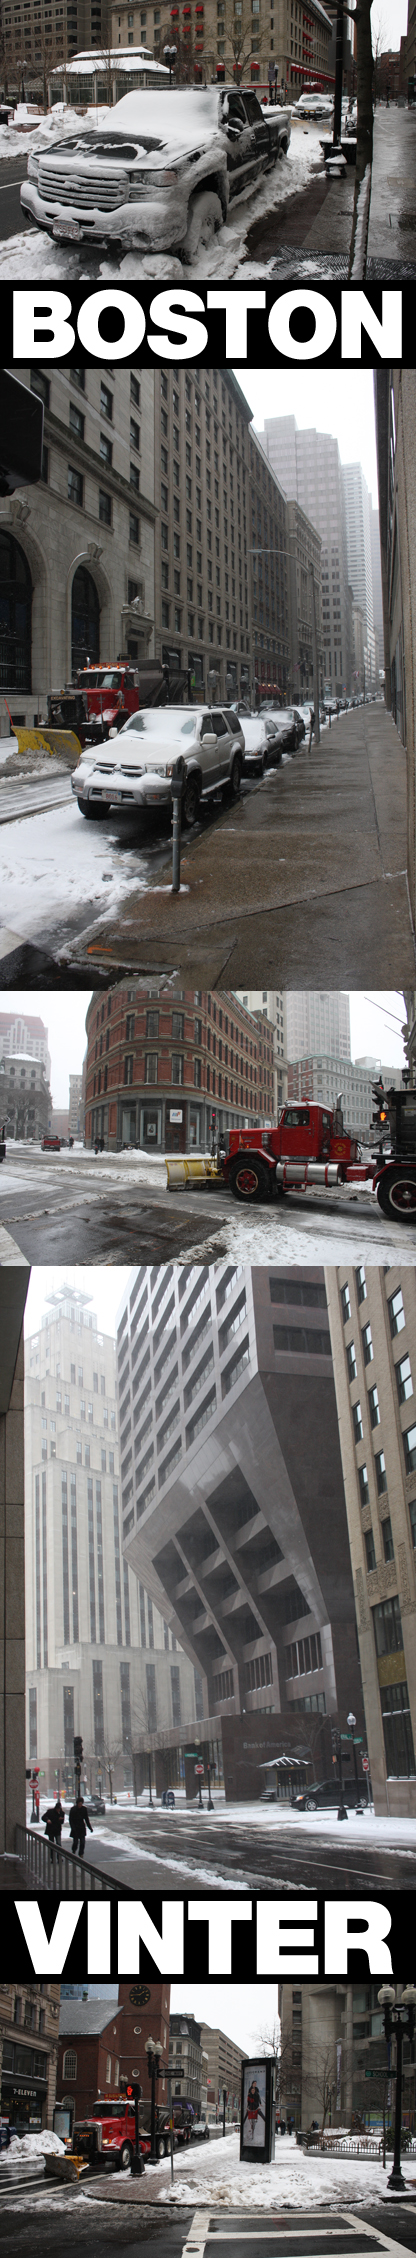 Snöstorm i Boston